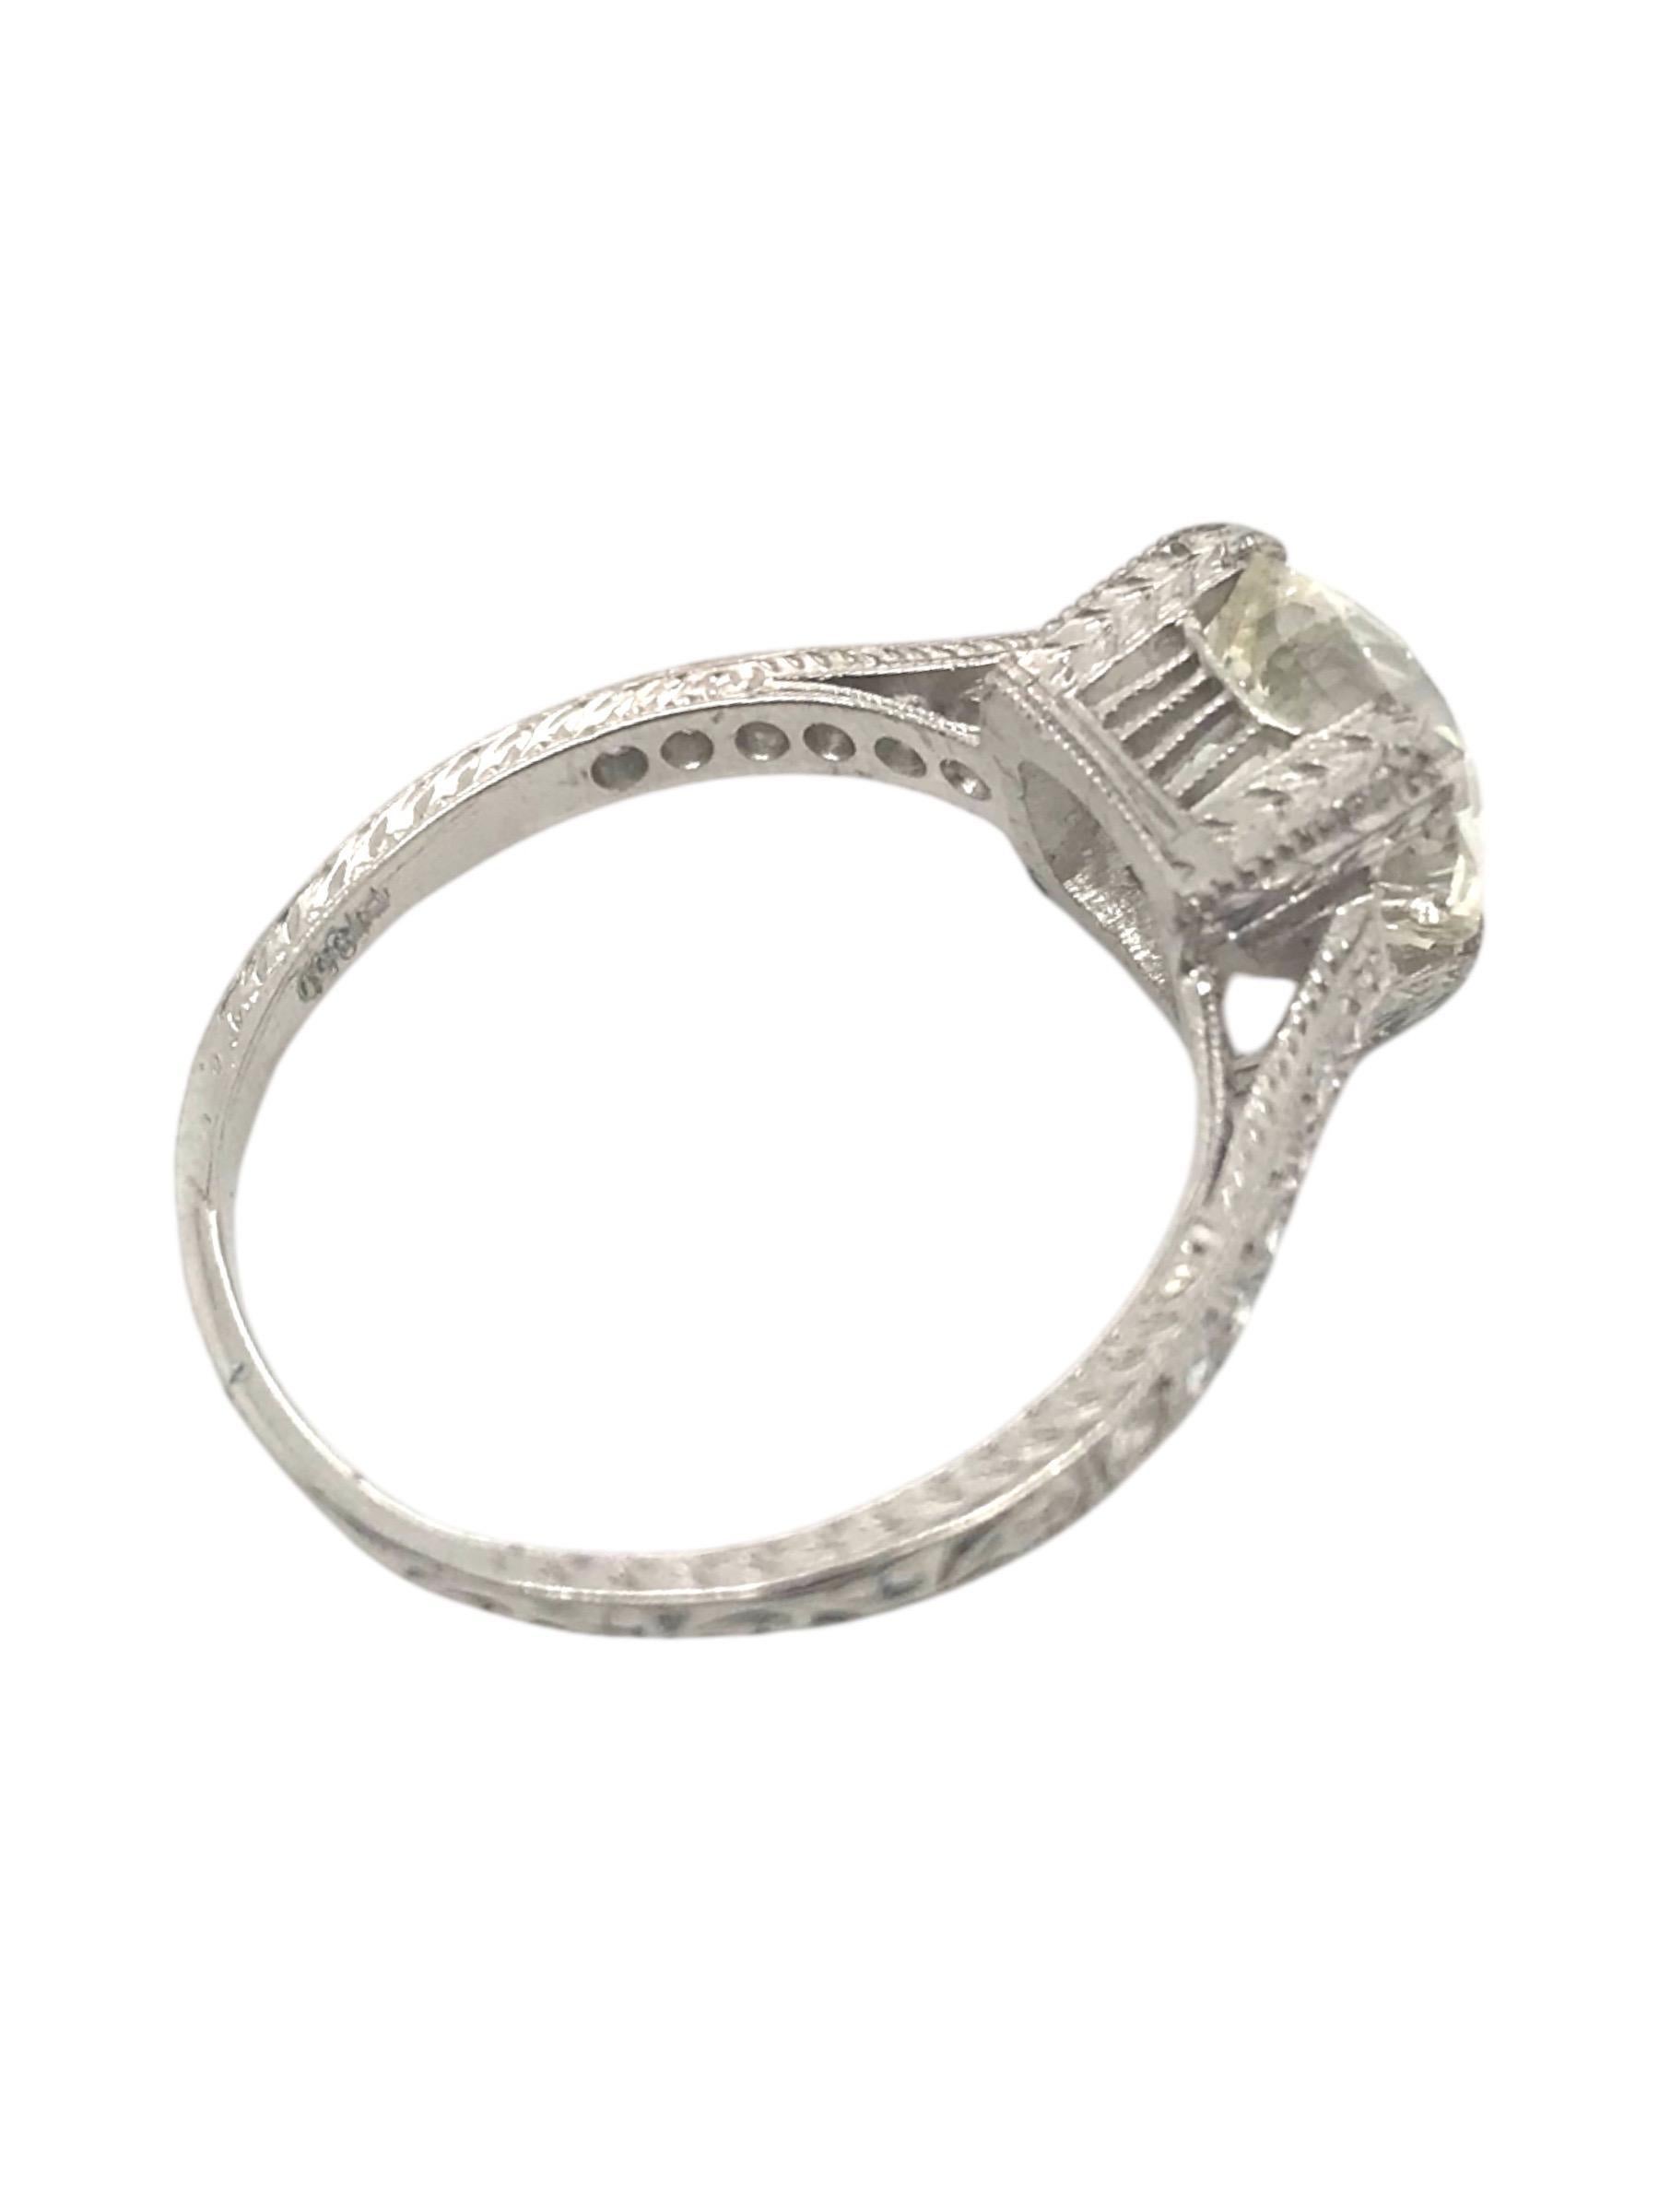 Edwardian Era Platinum 2.21 Carat Old Mine Cut Engagement Ring For Sale 2